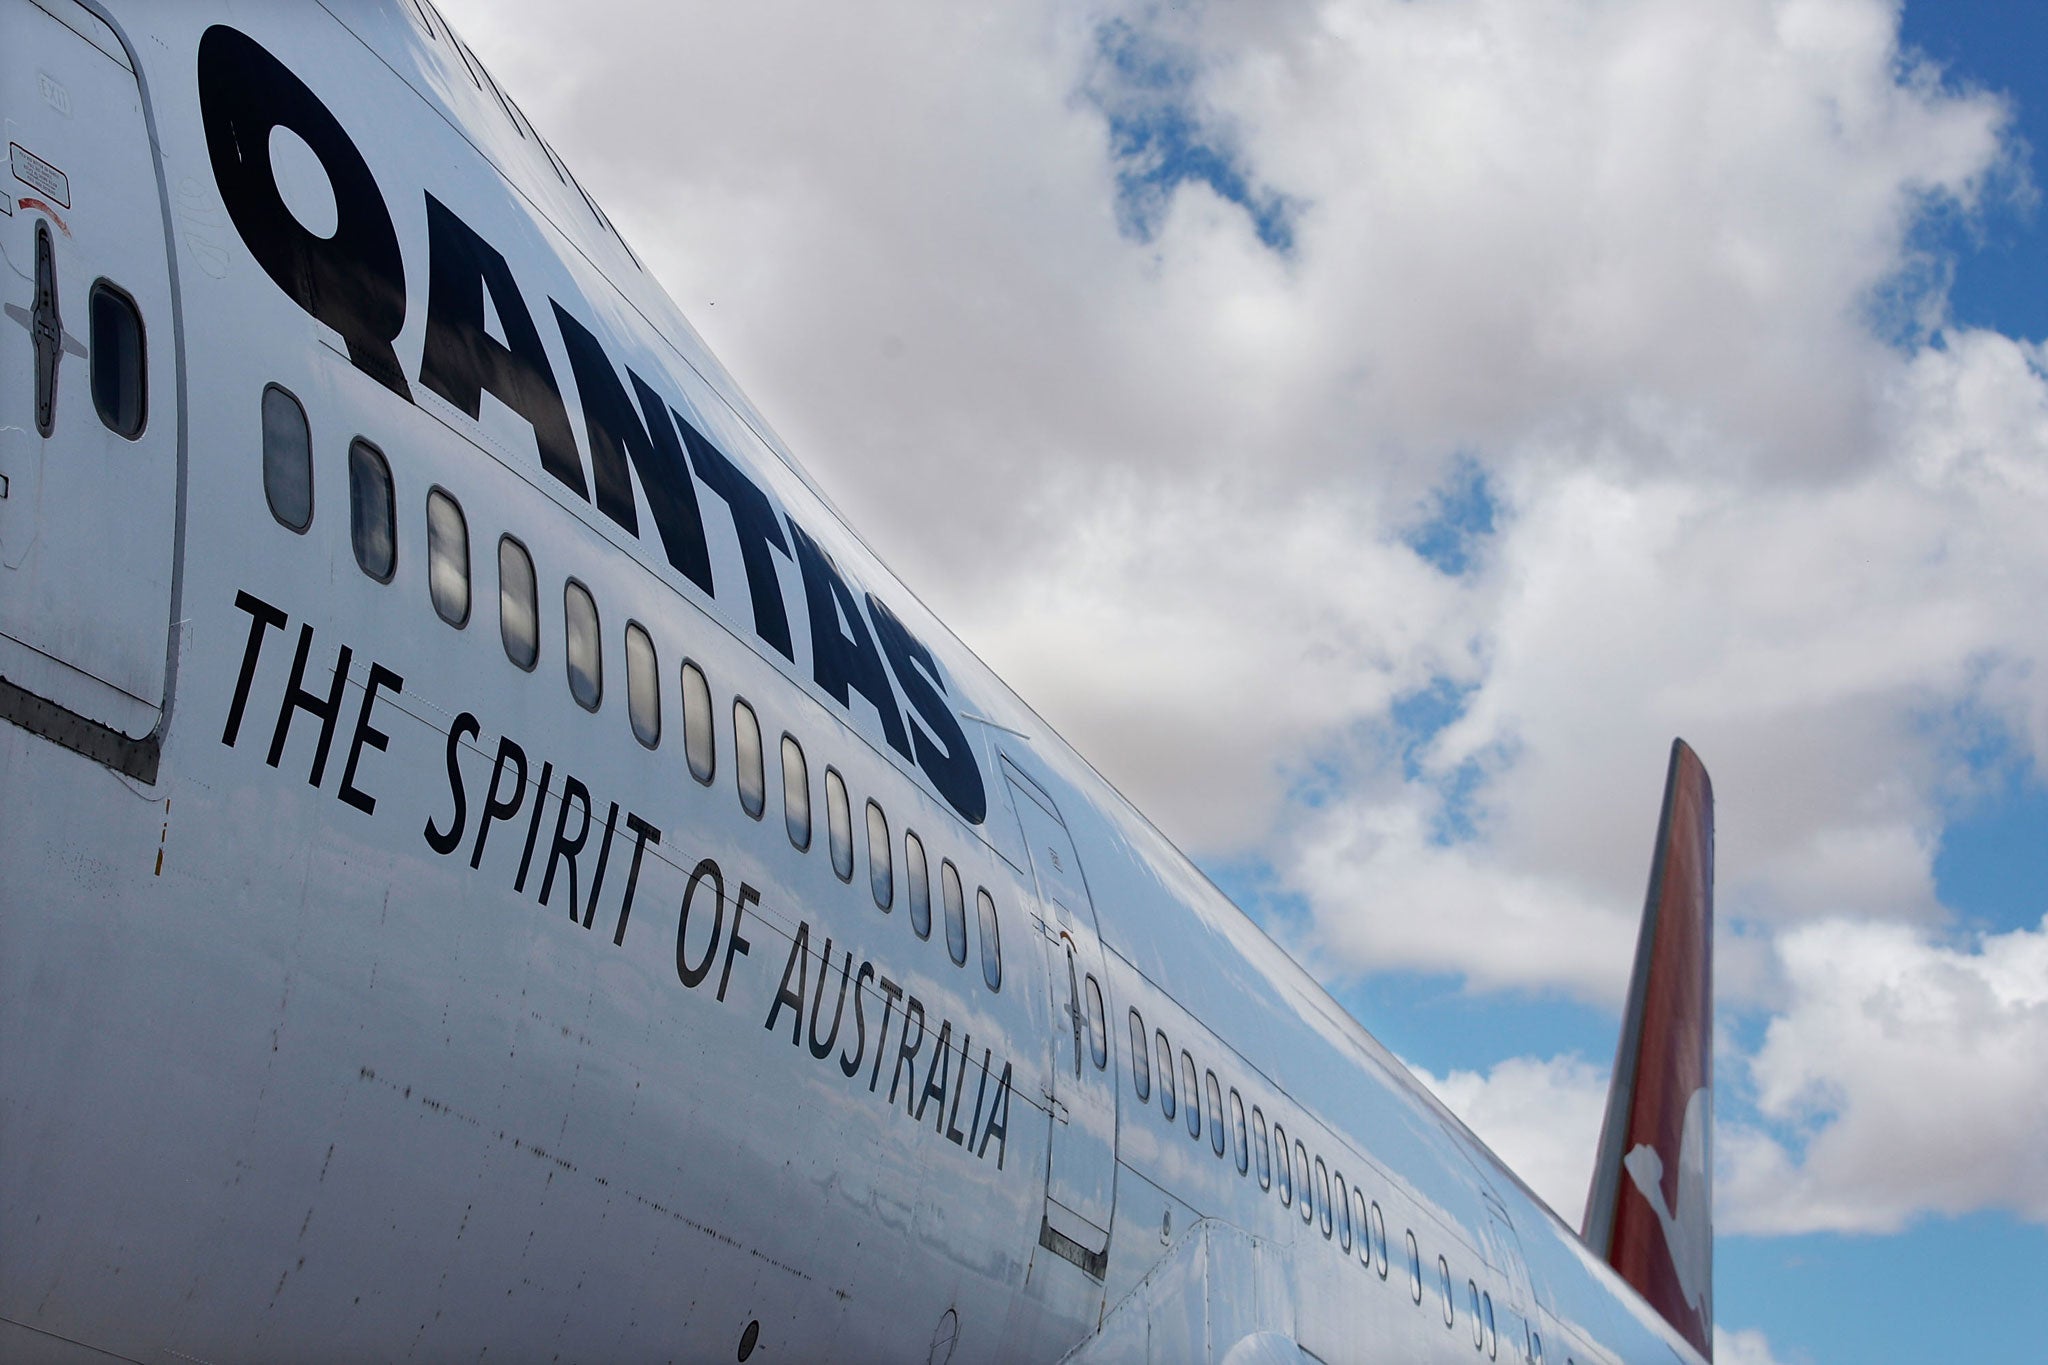 Qantas said it had made "no decisions" regarding life rafts